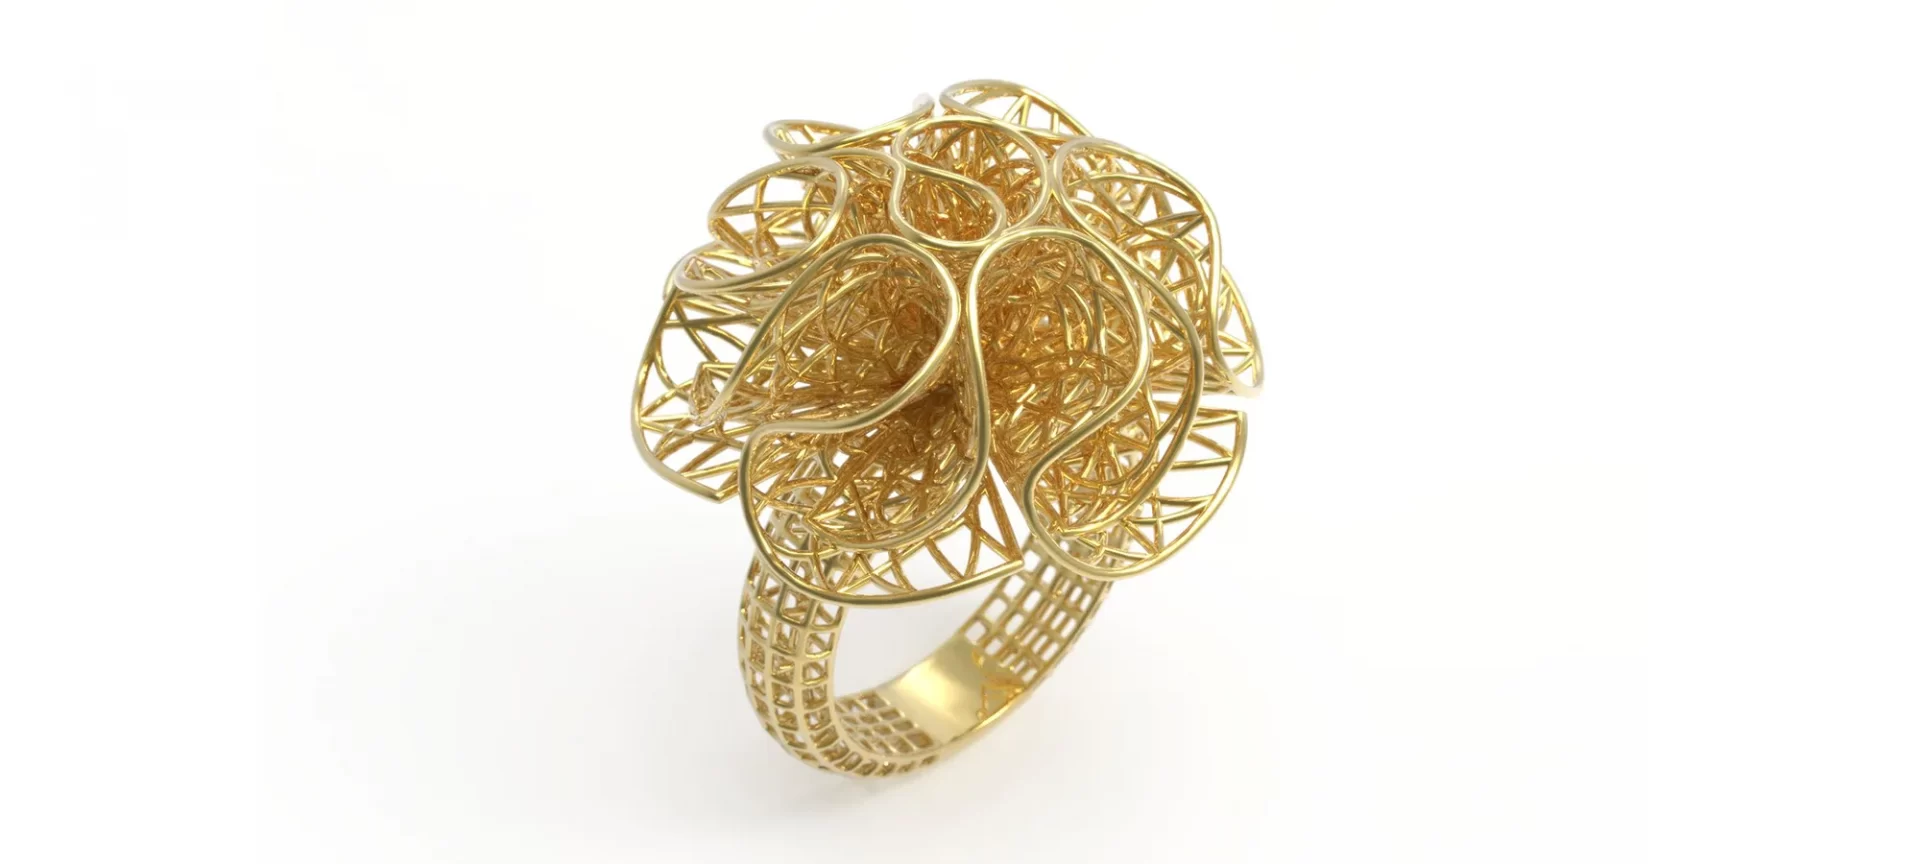 3D Printed Golden ring